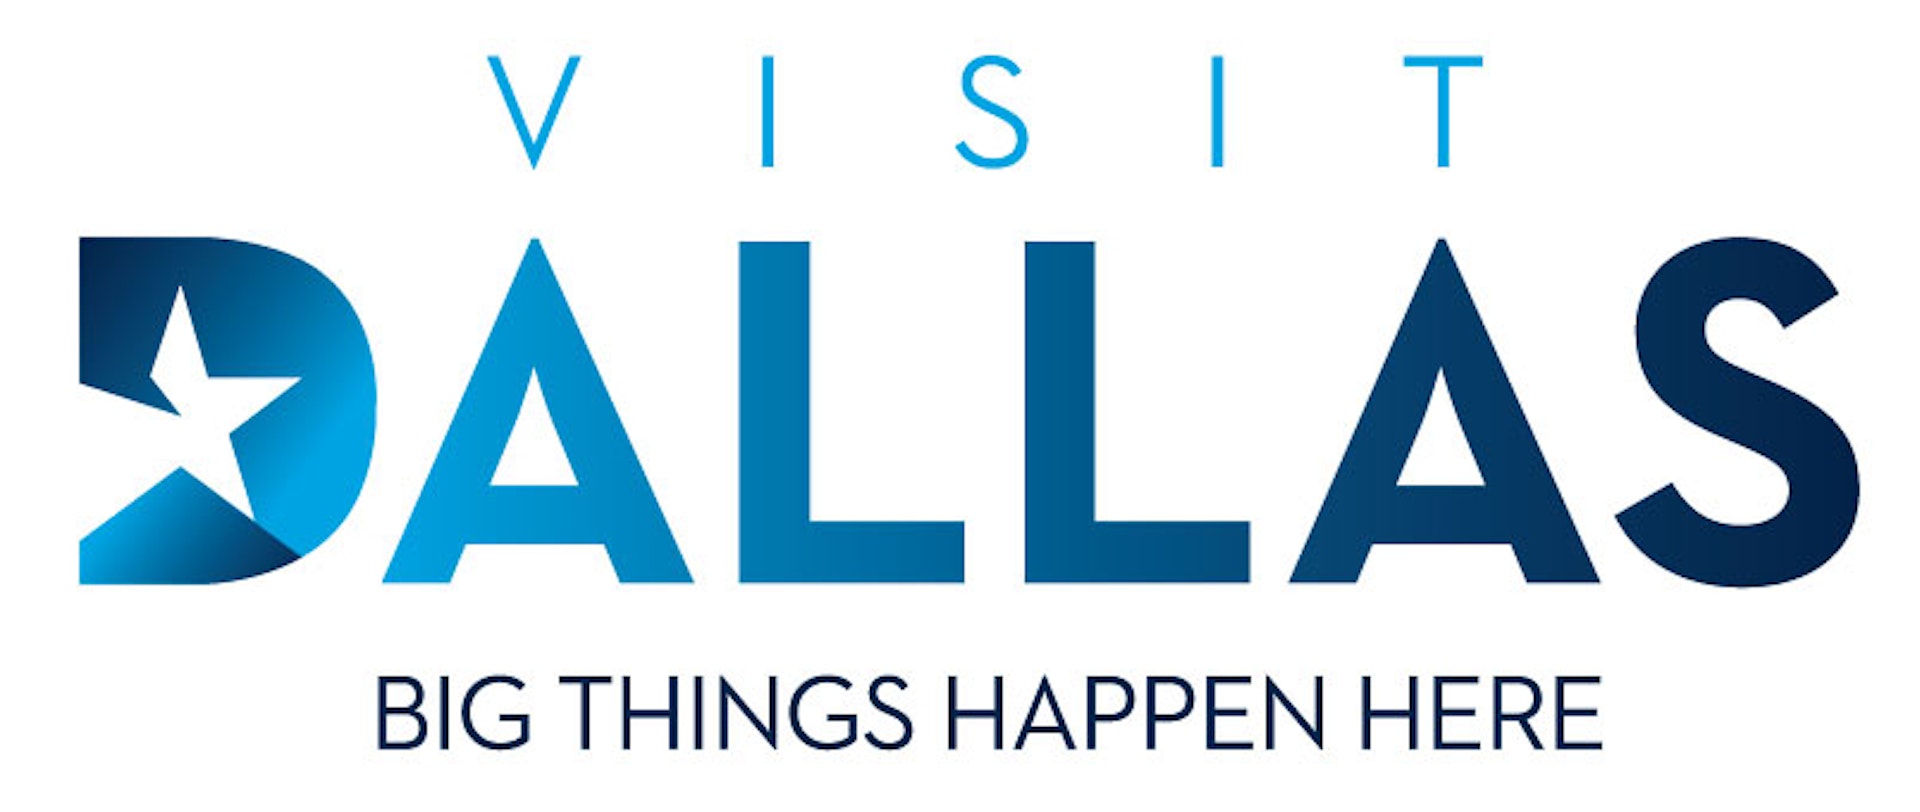 Visit Dallas | Big Things Happen Here